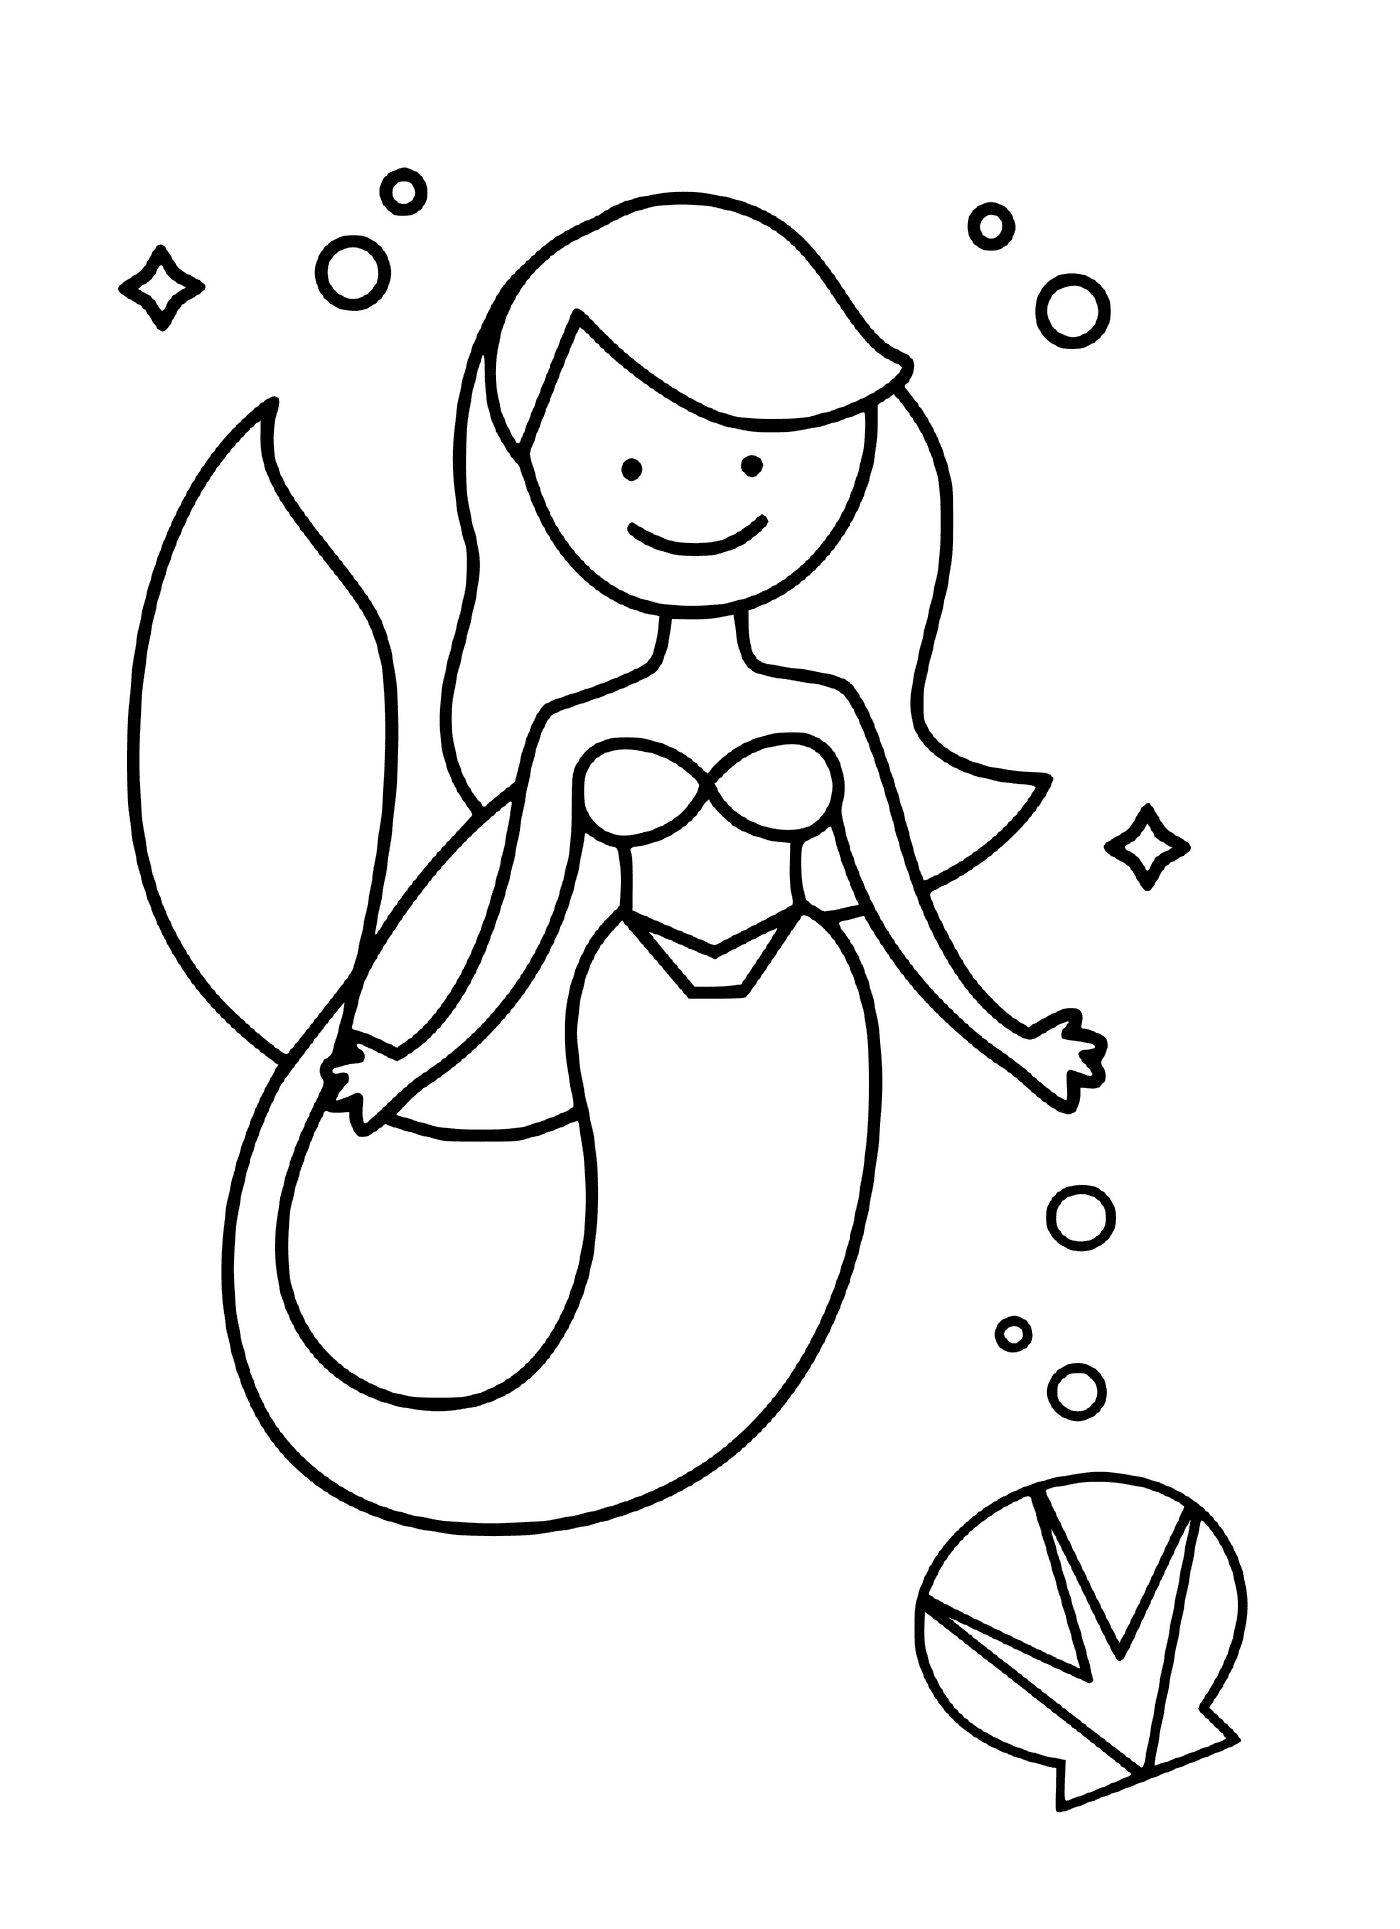   Princesse sirene à la Ariel 